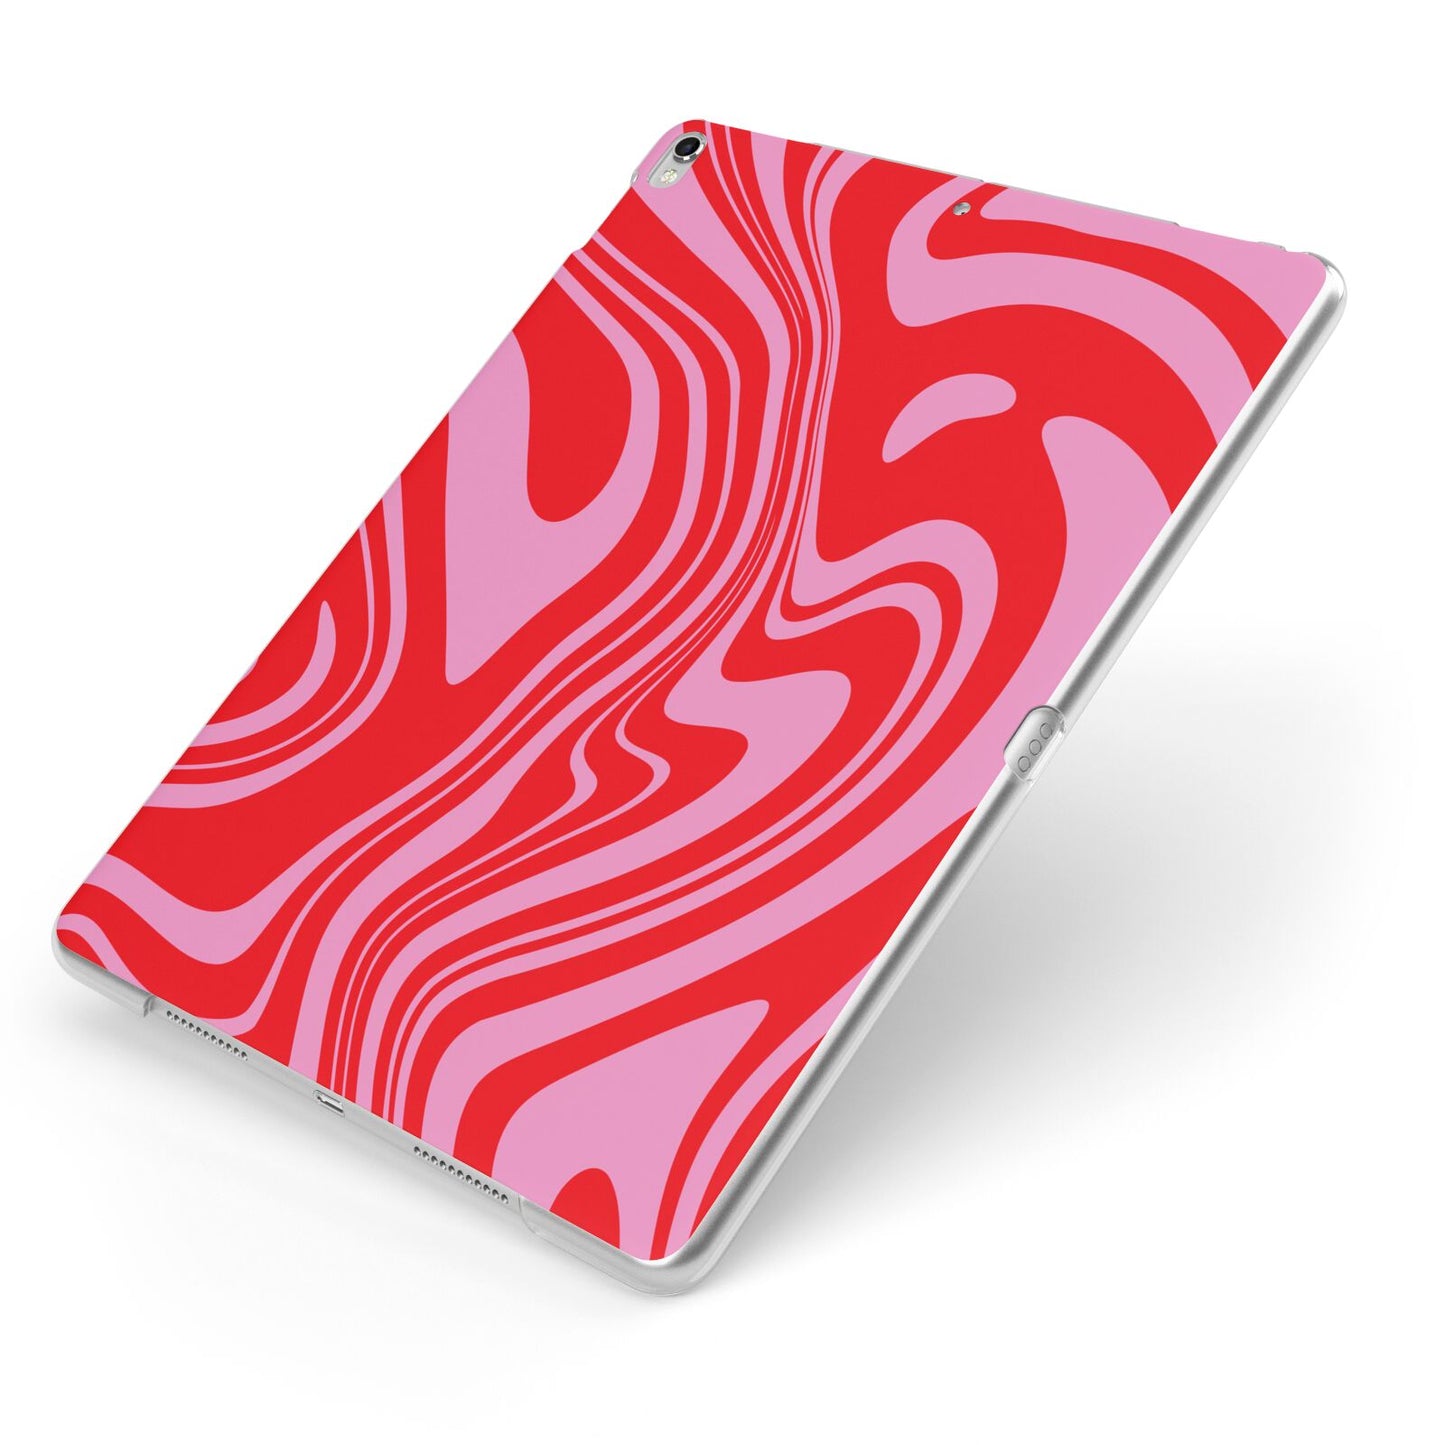 Red Swirl Apple iPad Case on Silver iPad Side View